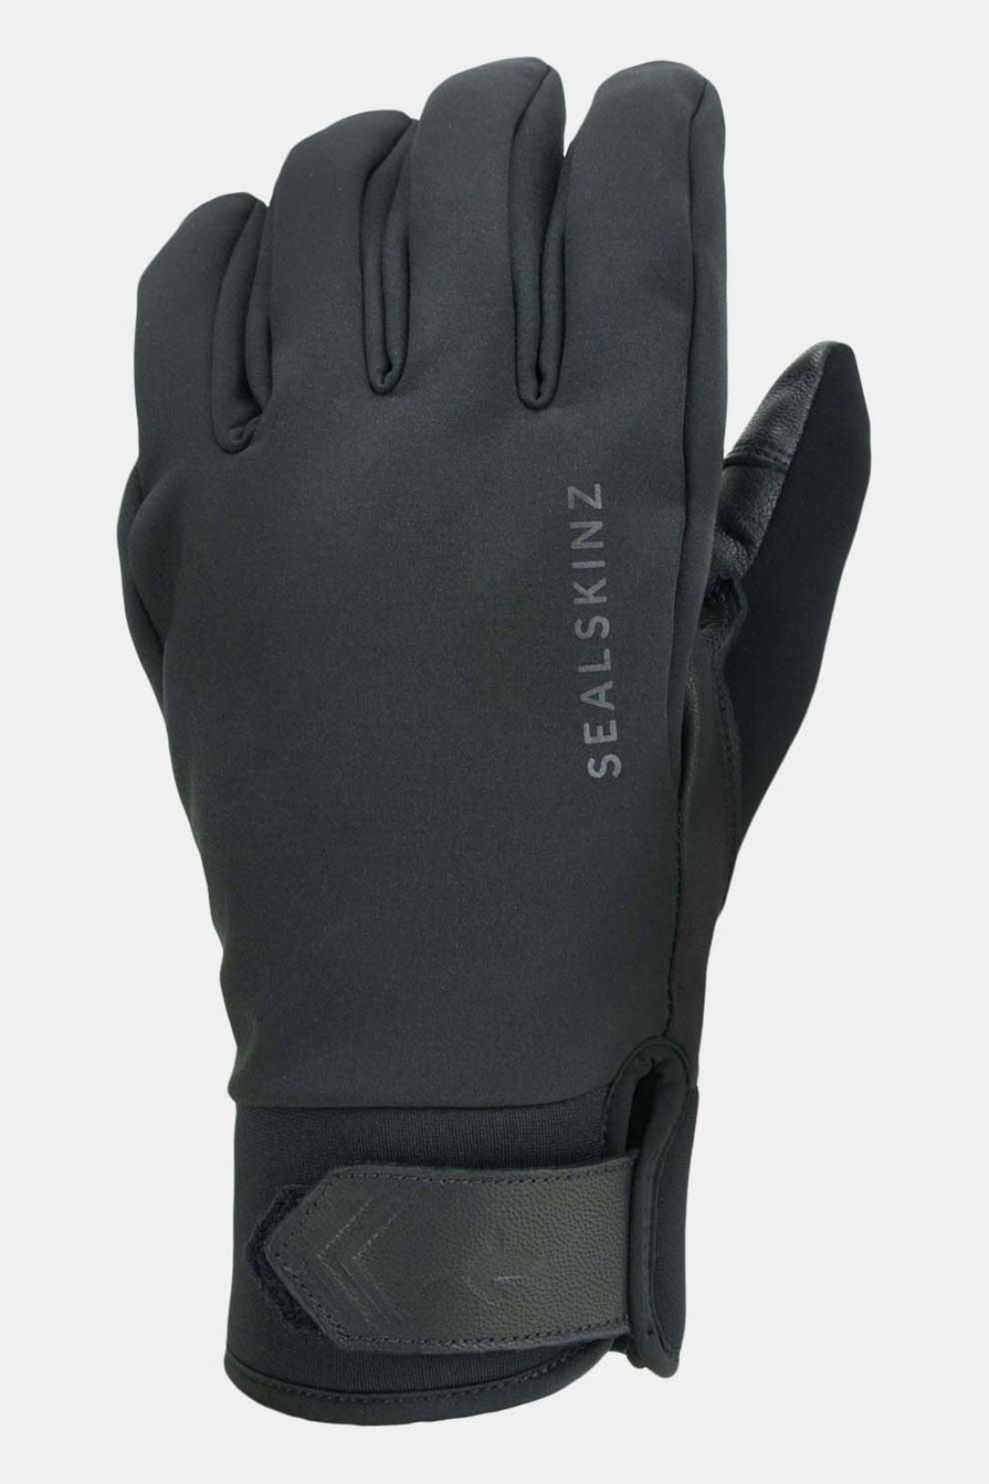 SealSkinz Womens Waterproof All Weather Insulated Glove